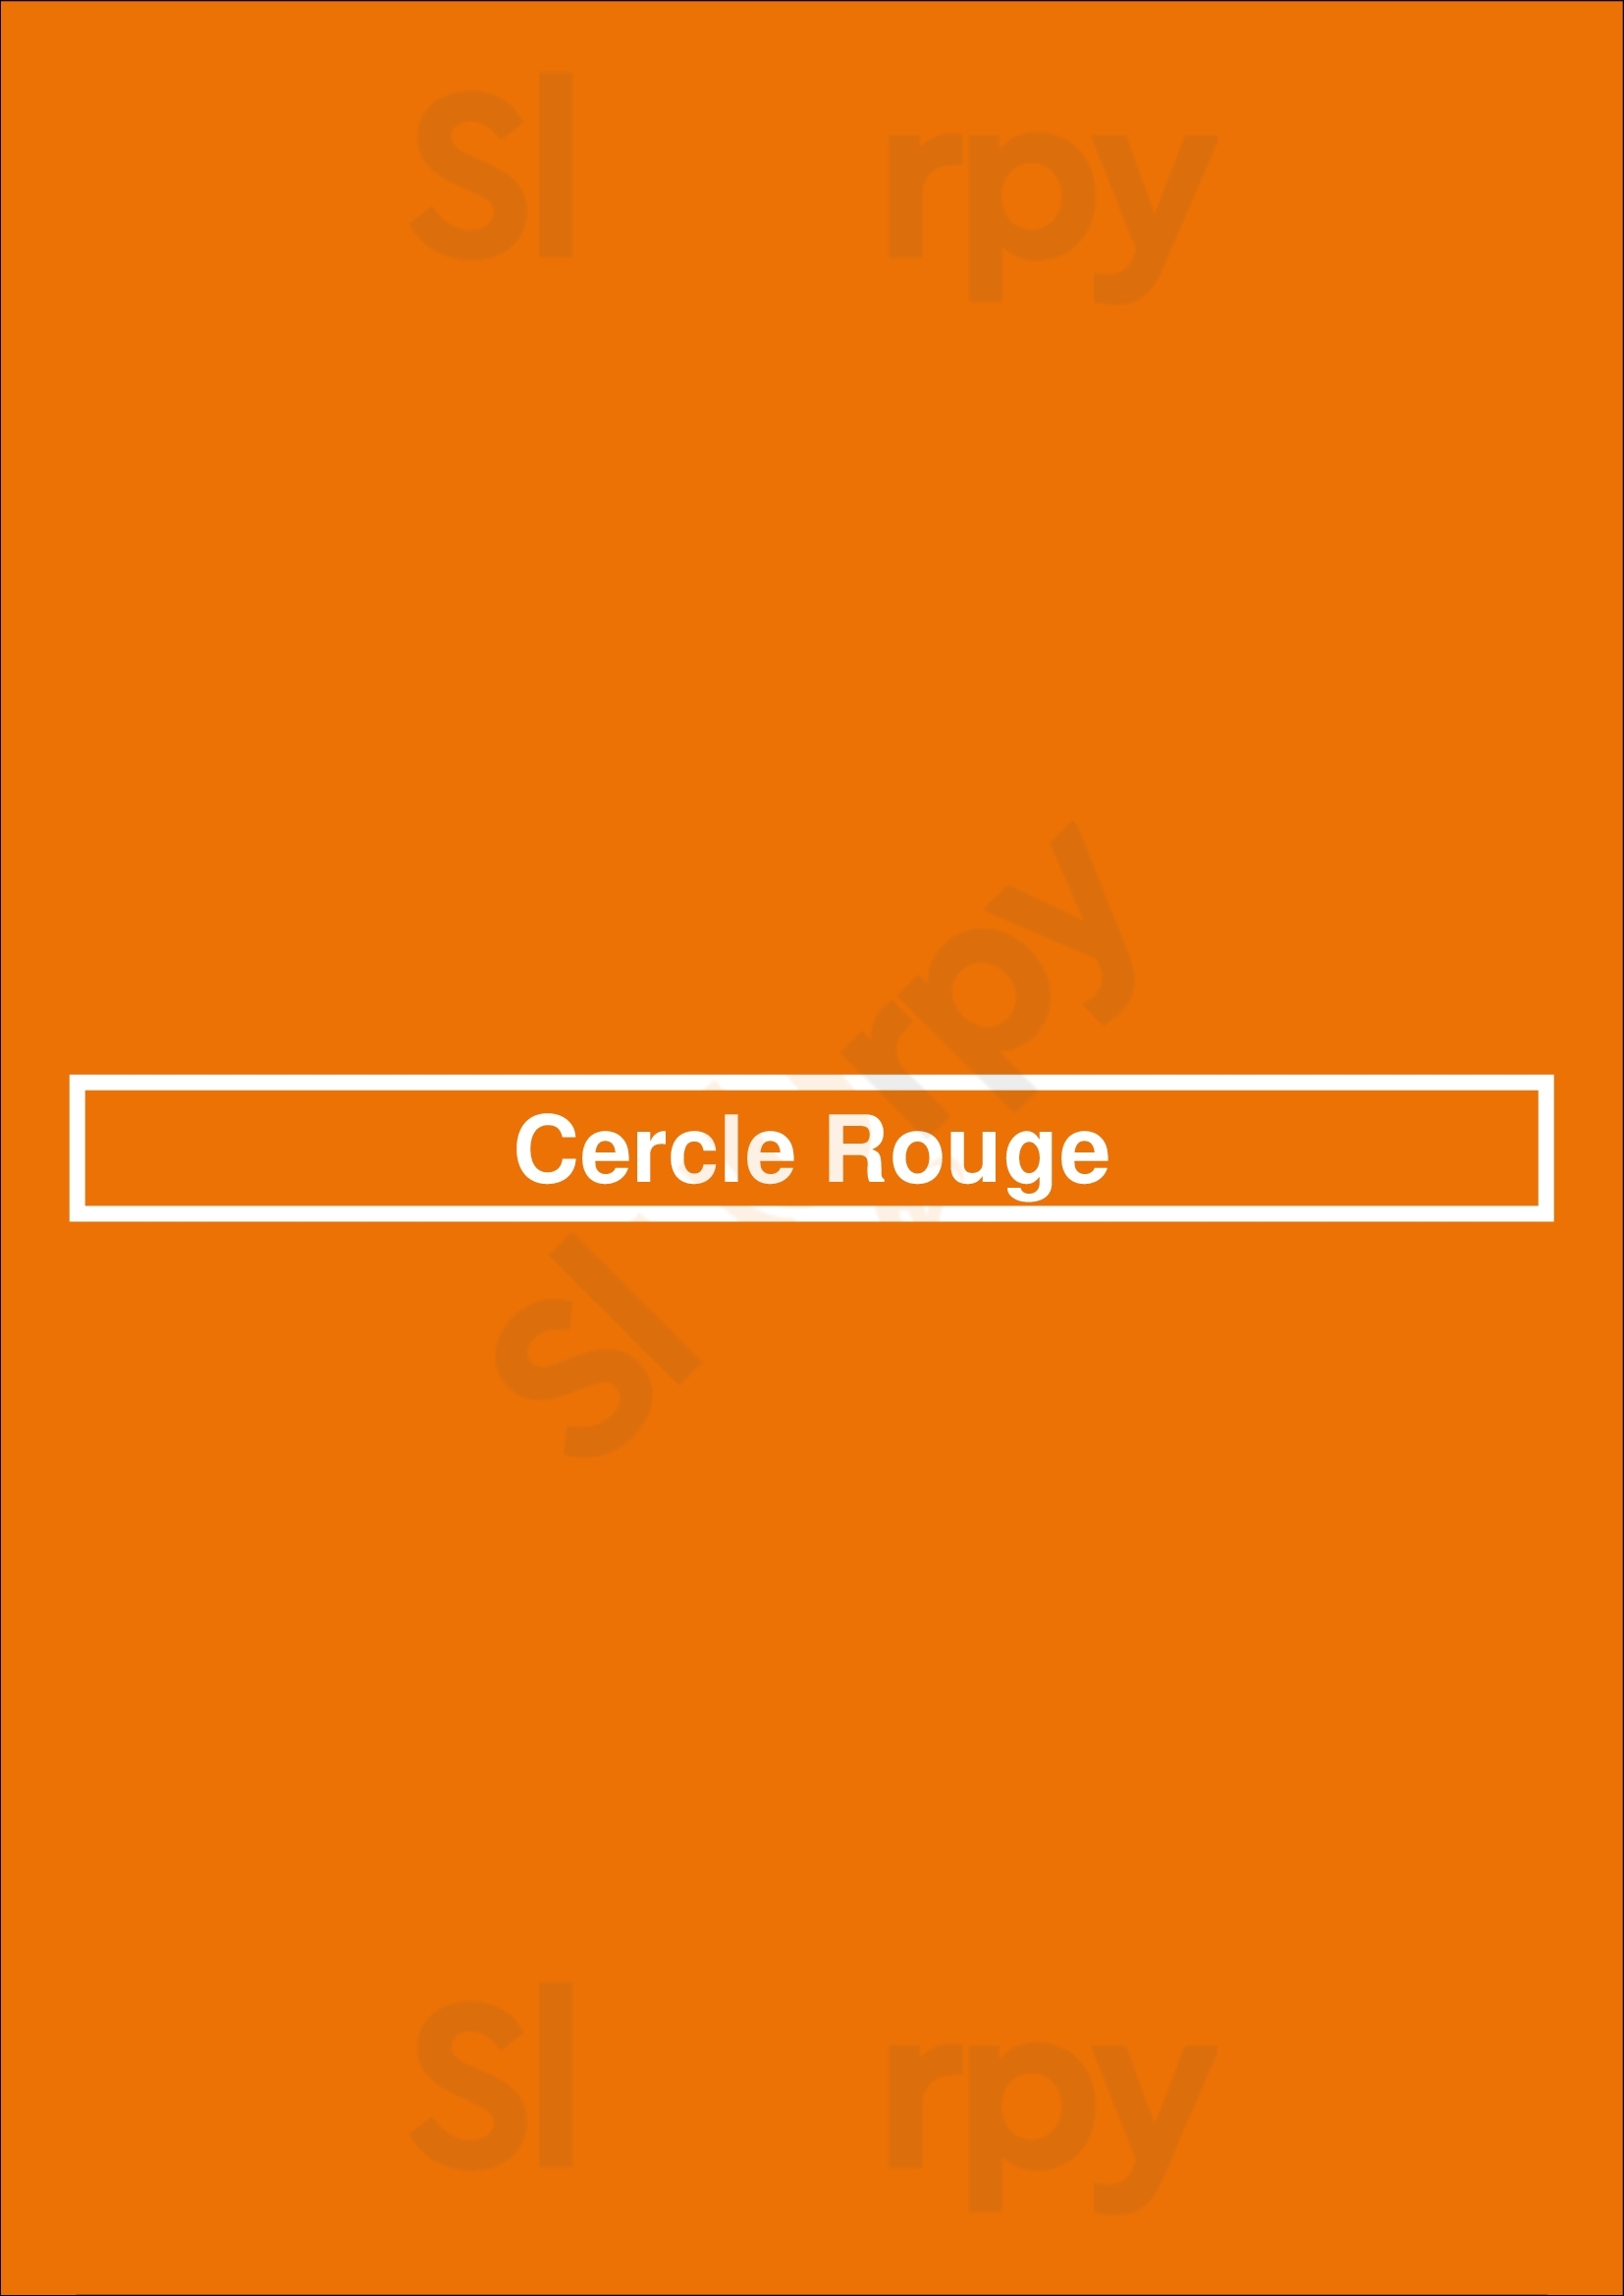 Cercle Rouge Lyon Menu - 1